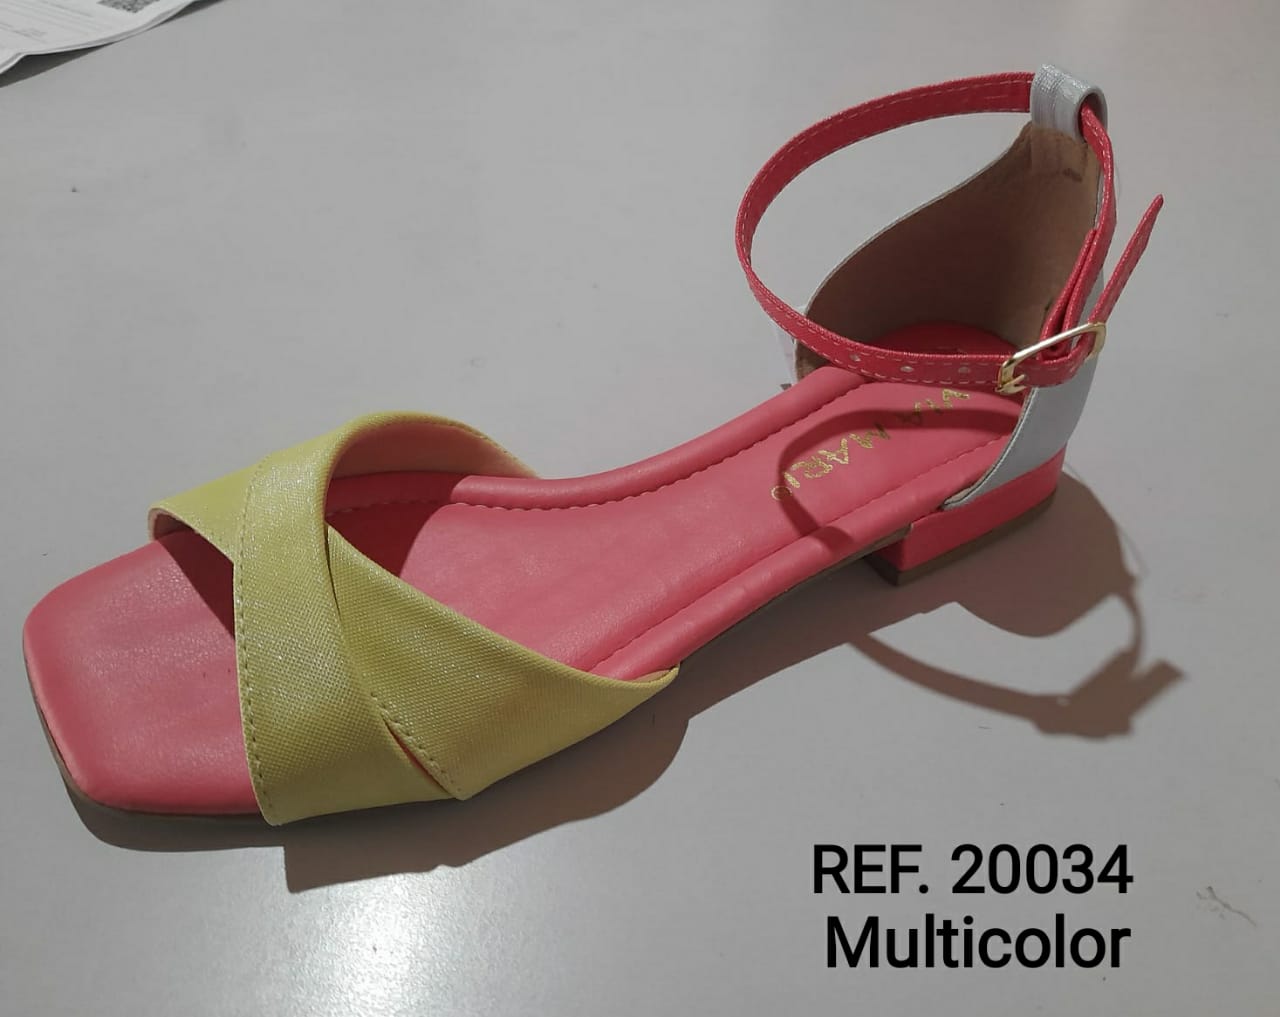 Ref. 20034 - Multicolor